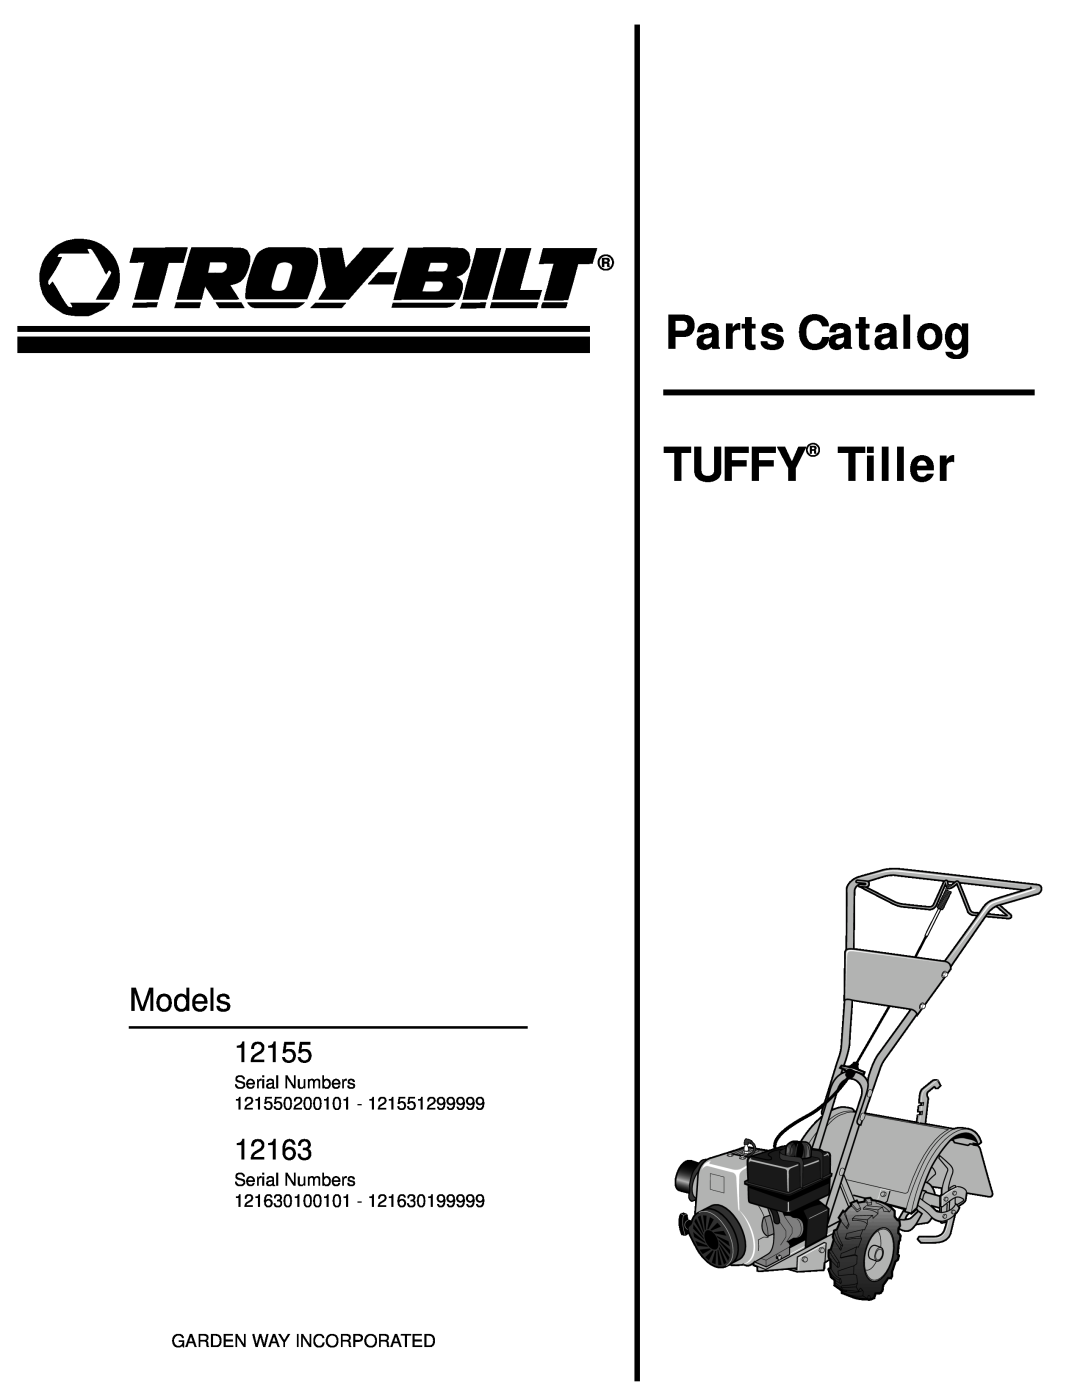 Troy-Bilt 12163 manual Parts Catalog TUFFY Tiller, Models, 12155 